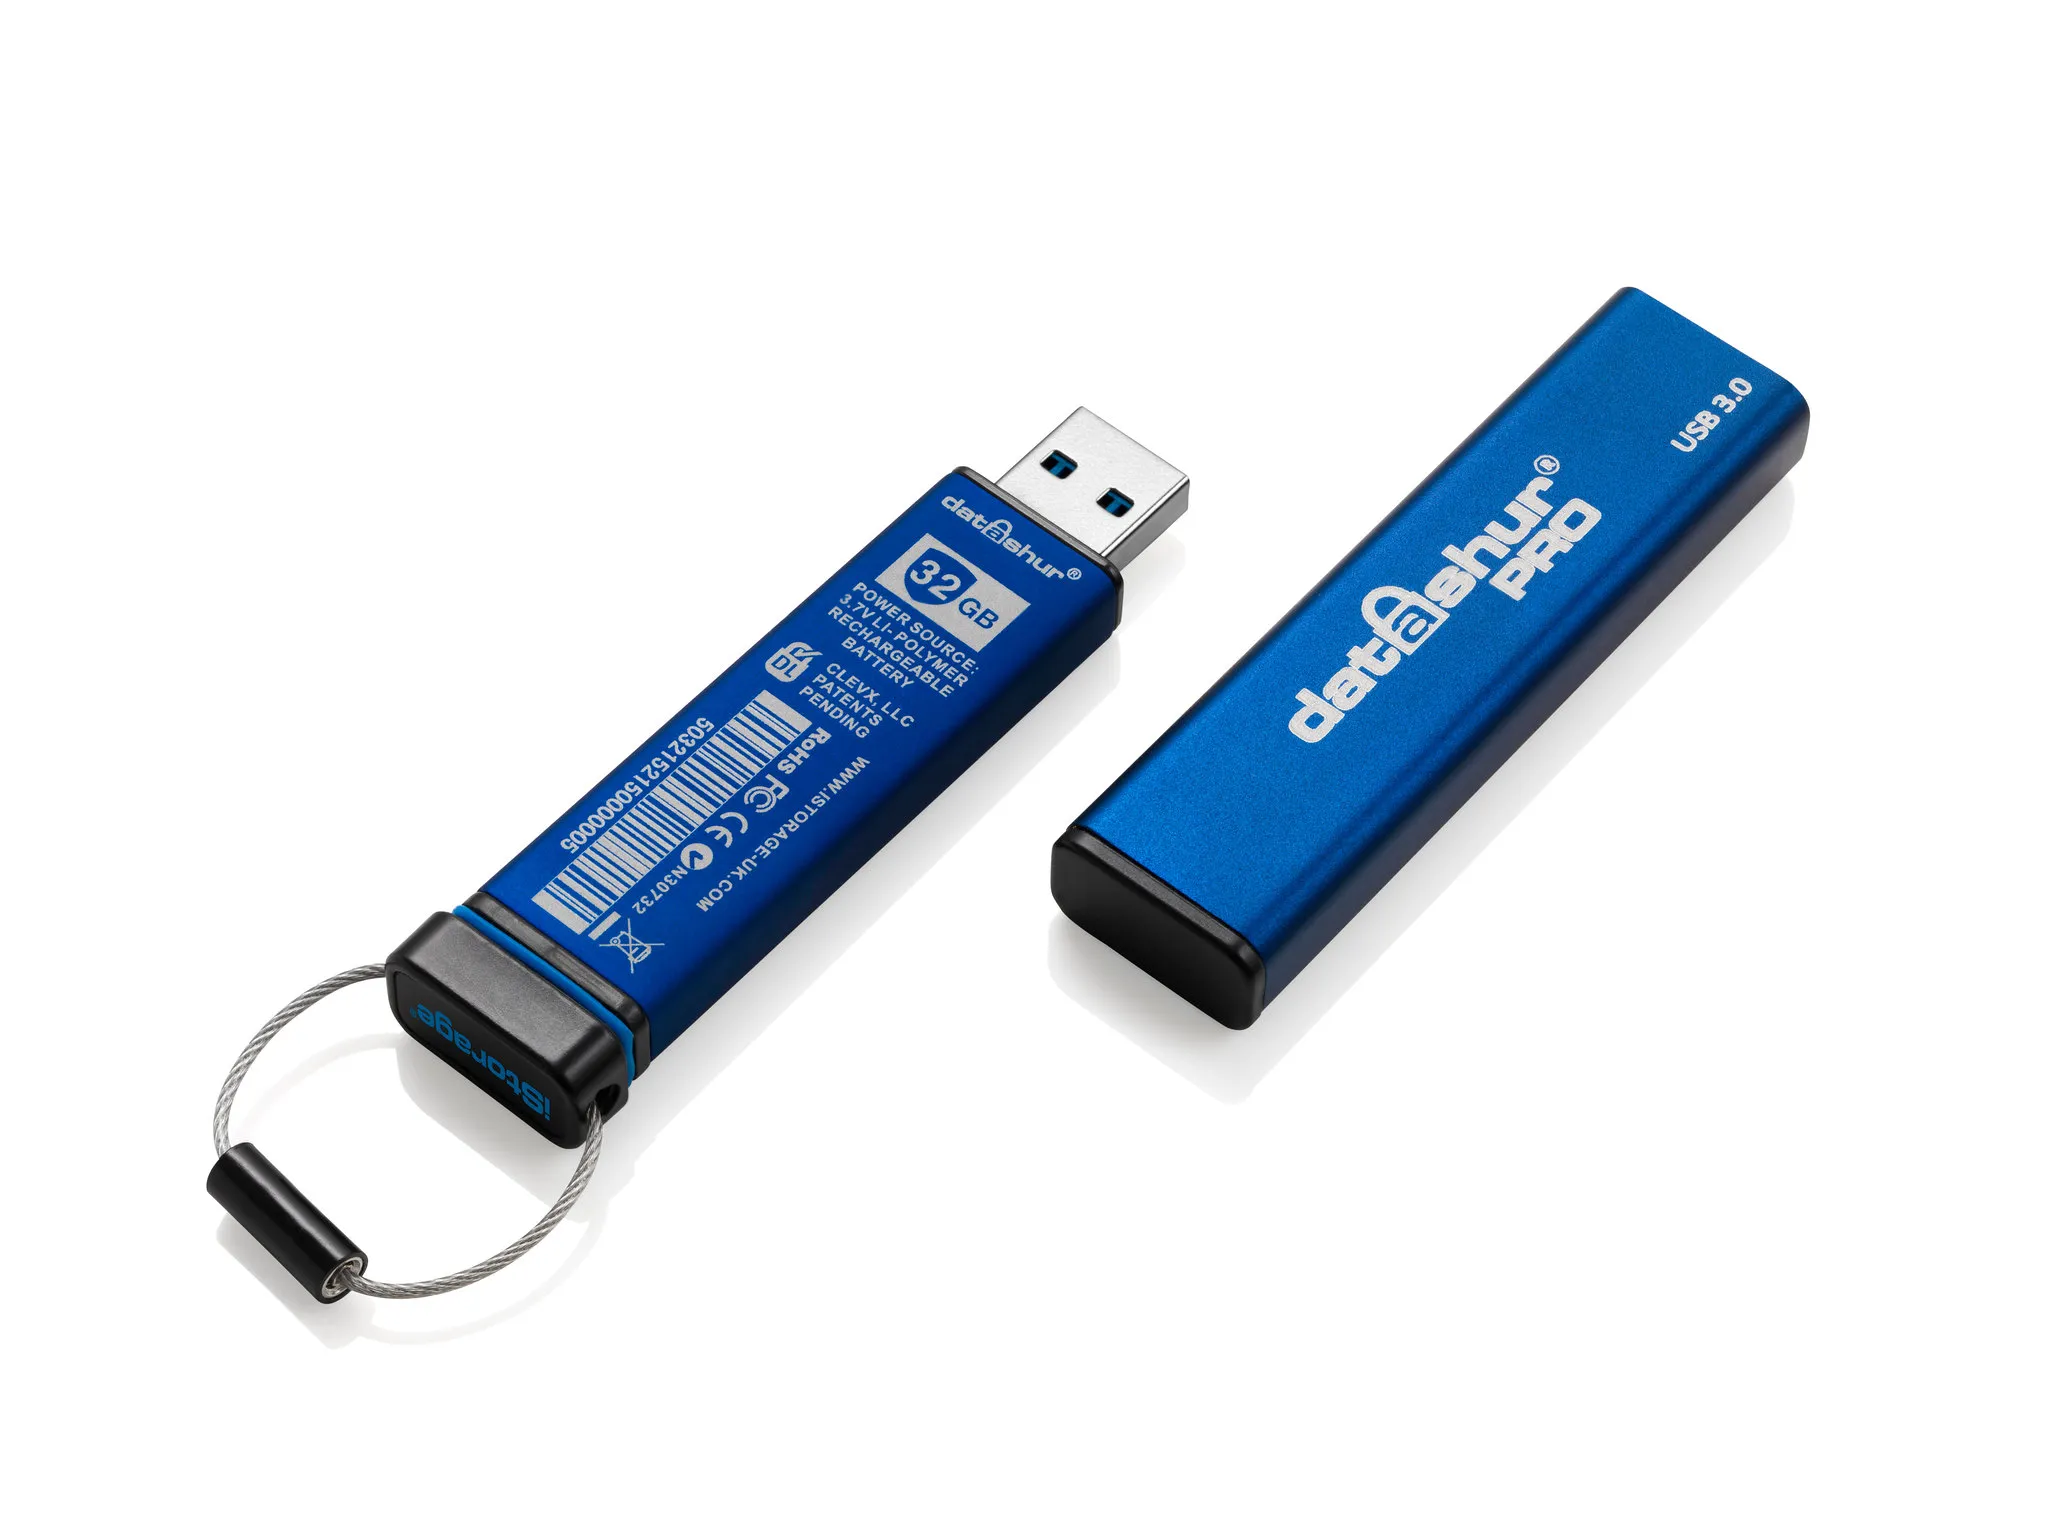 Vente iStorage datAshur Pro USB3 256-bit 16GB iStorage au meilleur prix - visuel 8